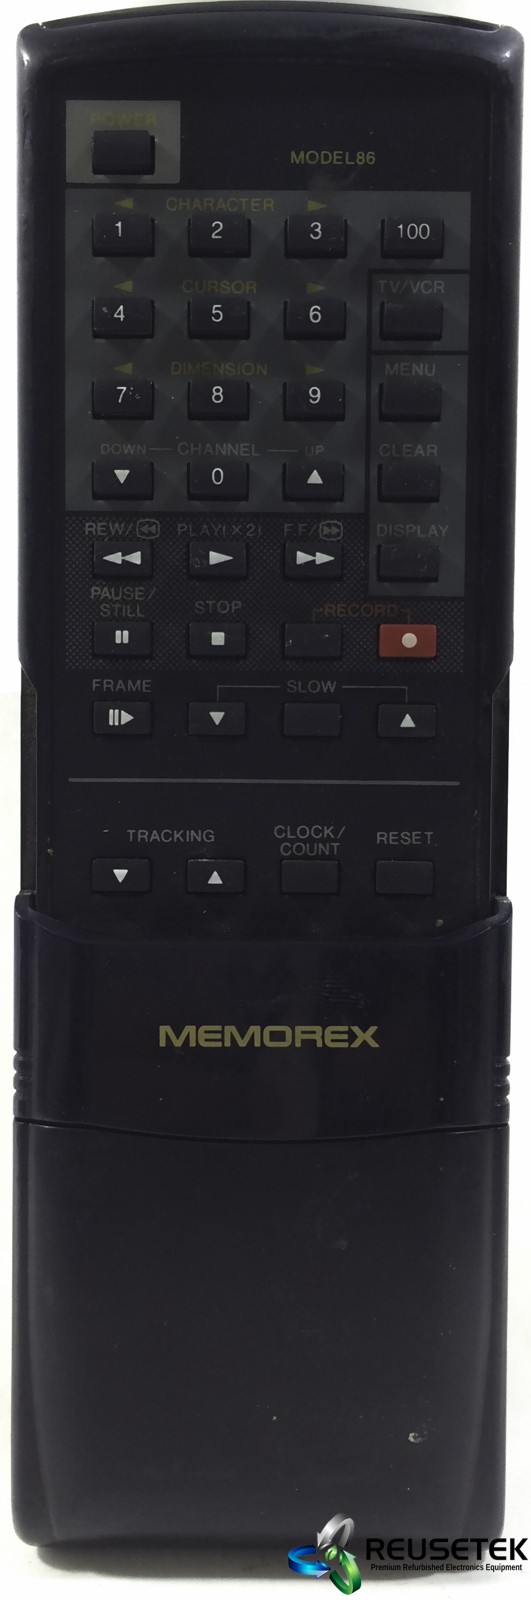 100401-B61-Memorex 86 VCR Remote Control-image